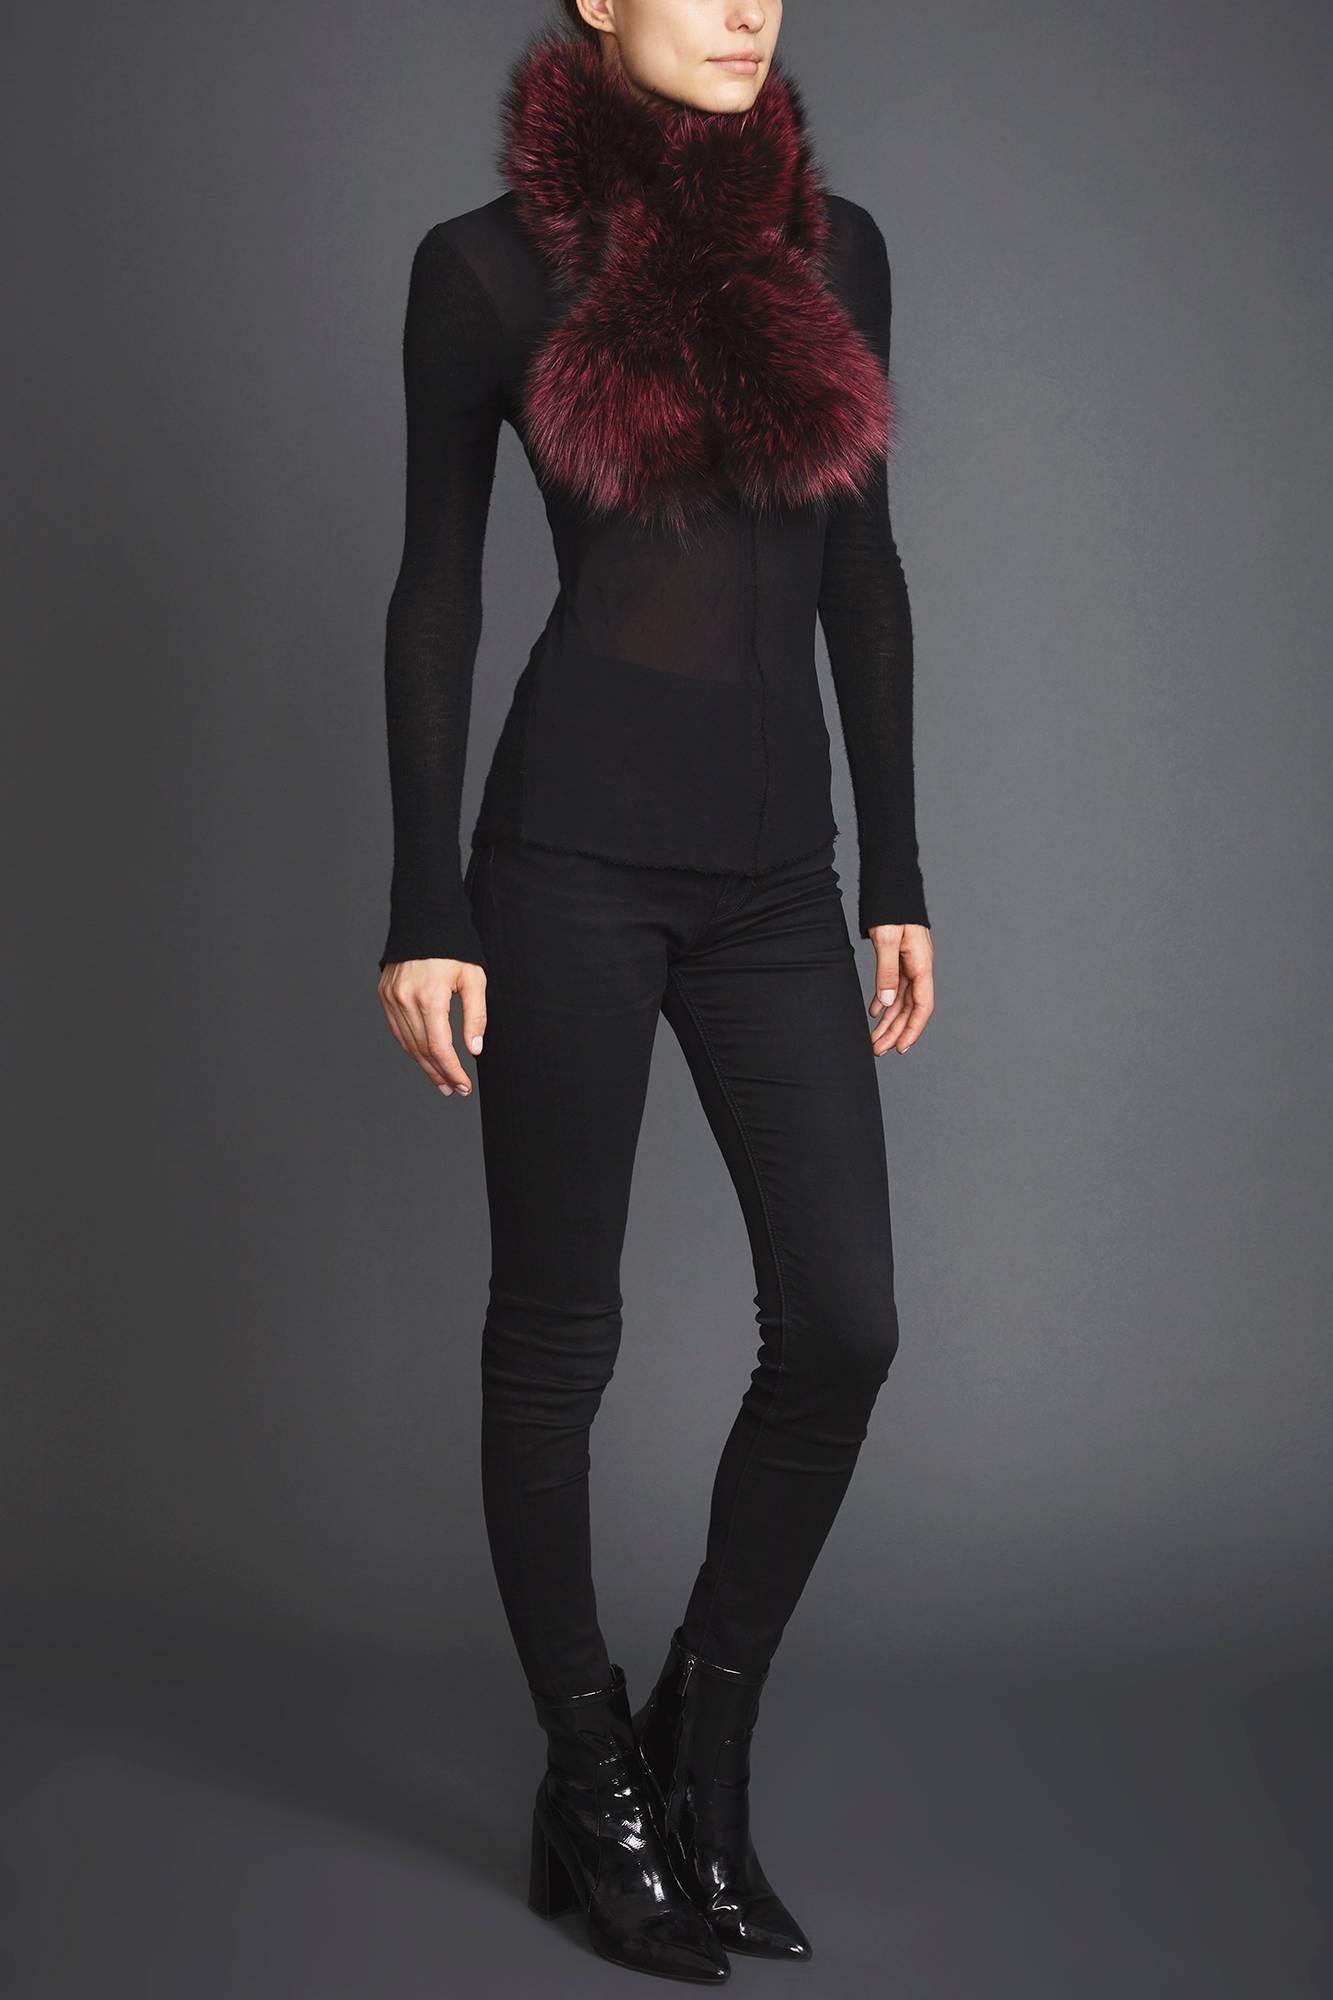 Black Verheyen London Lapel Cross-through Collar in Soft Ruby Fox Fur - Brand New 